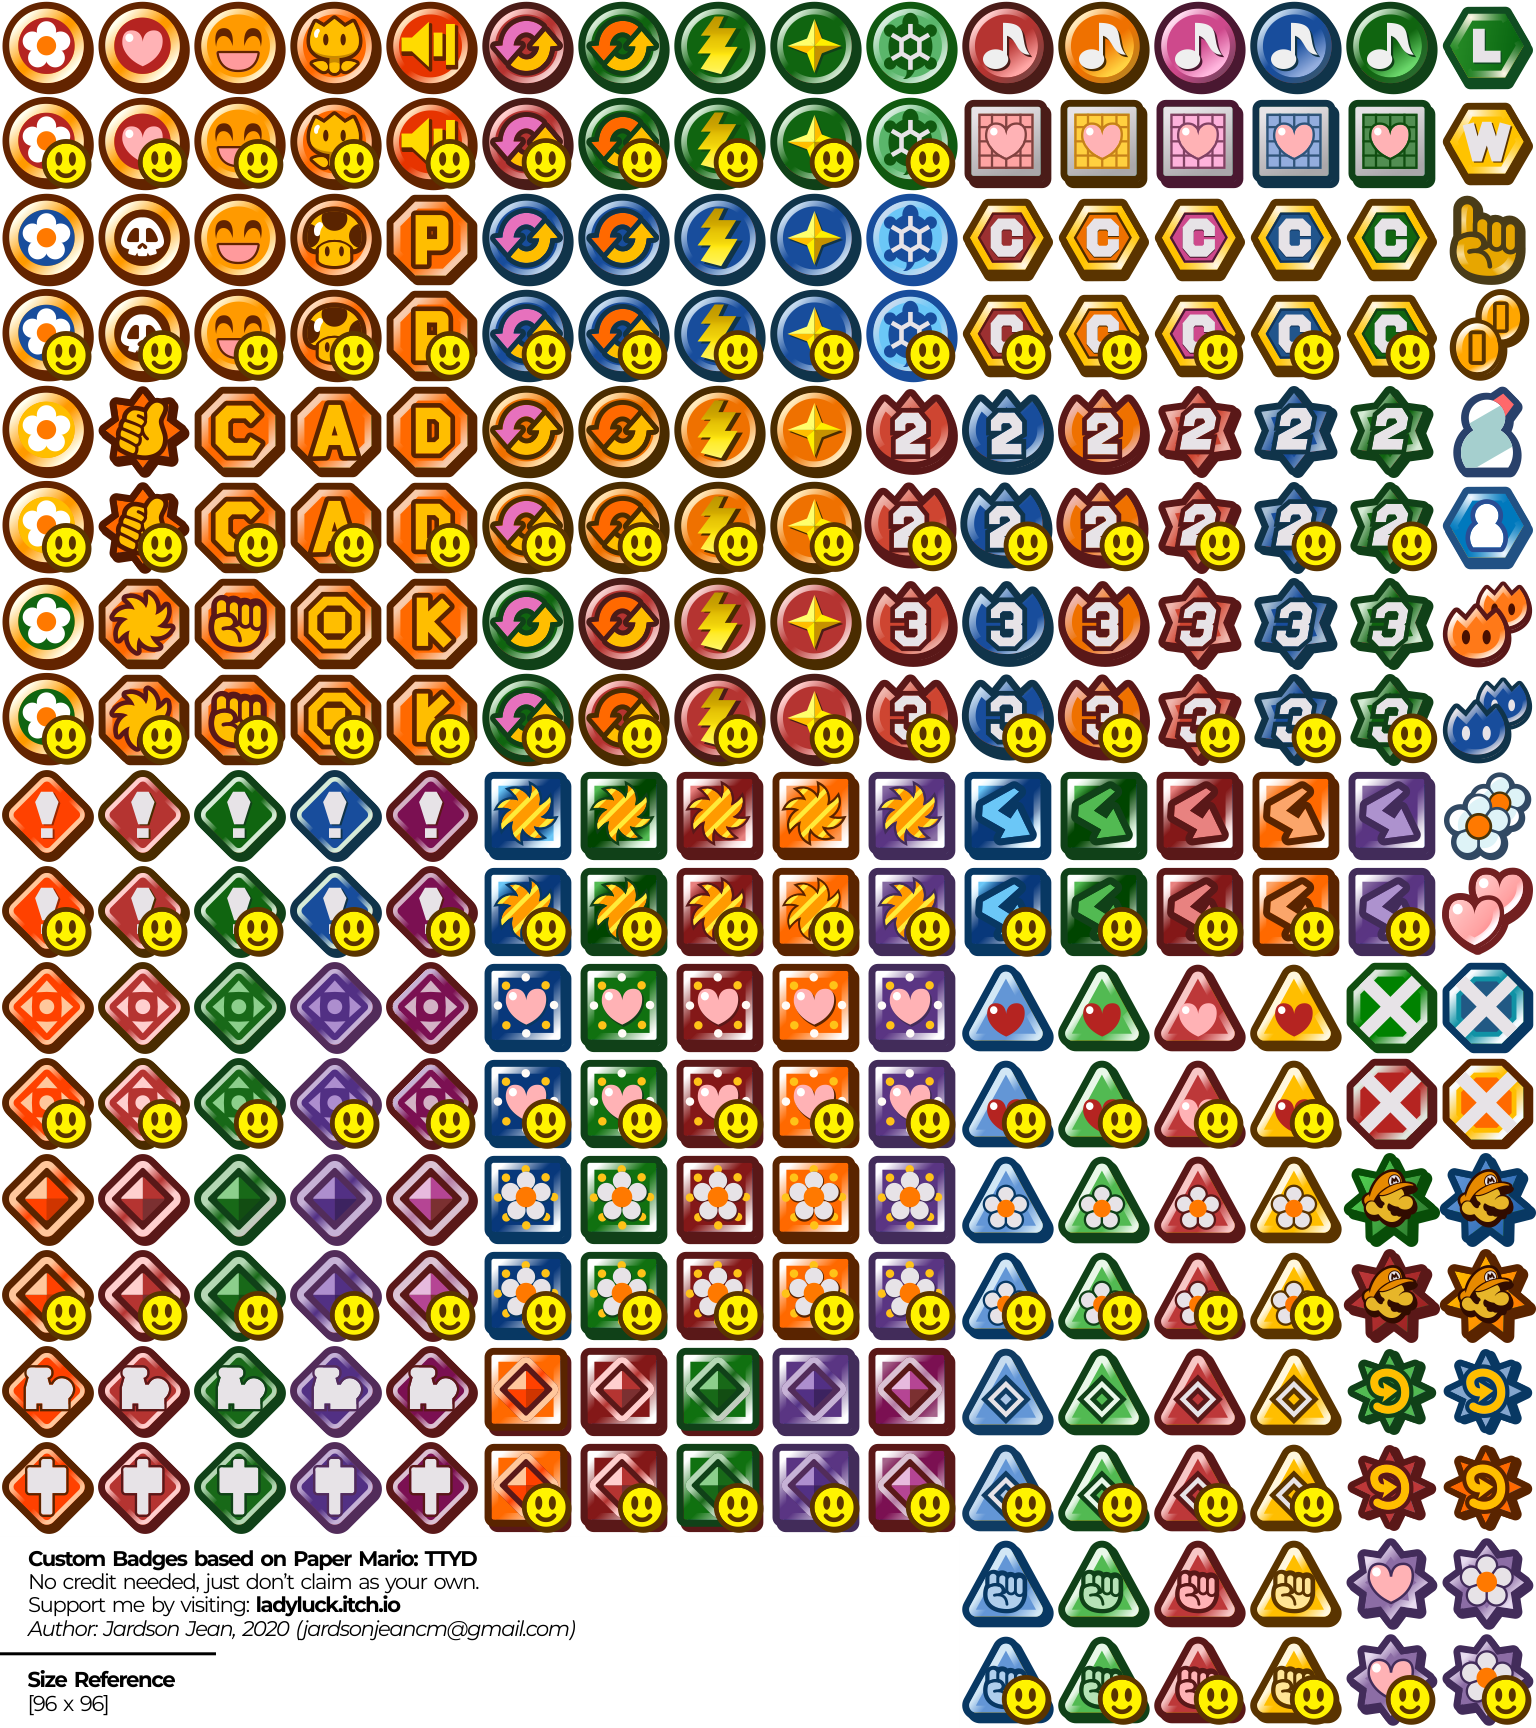 Paper Mario Customs - Badges (TTYD)